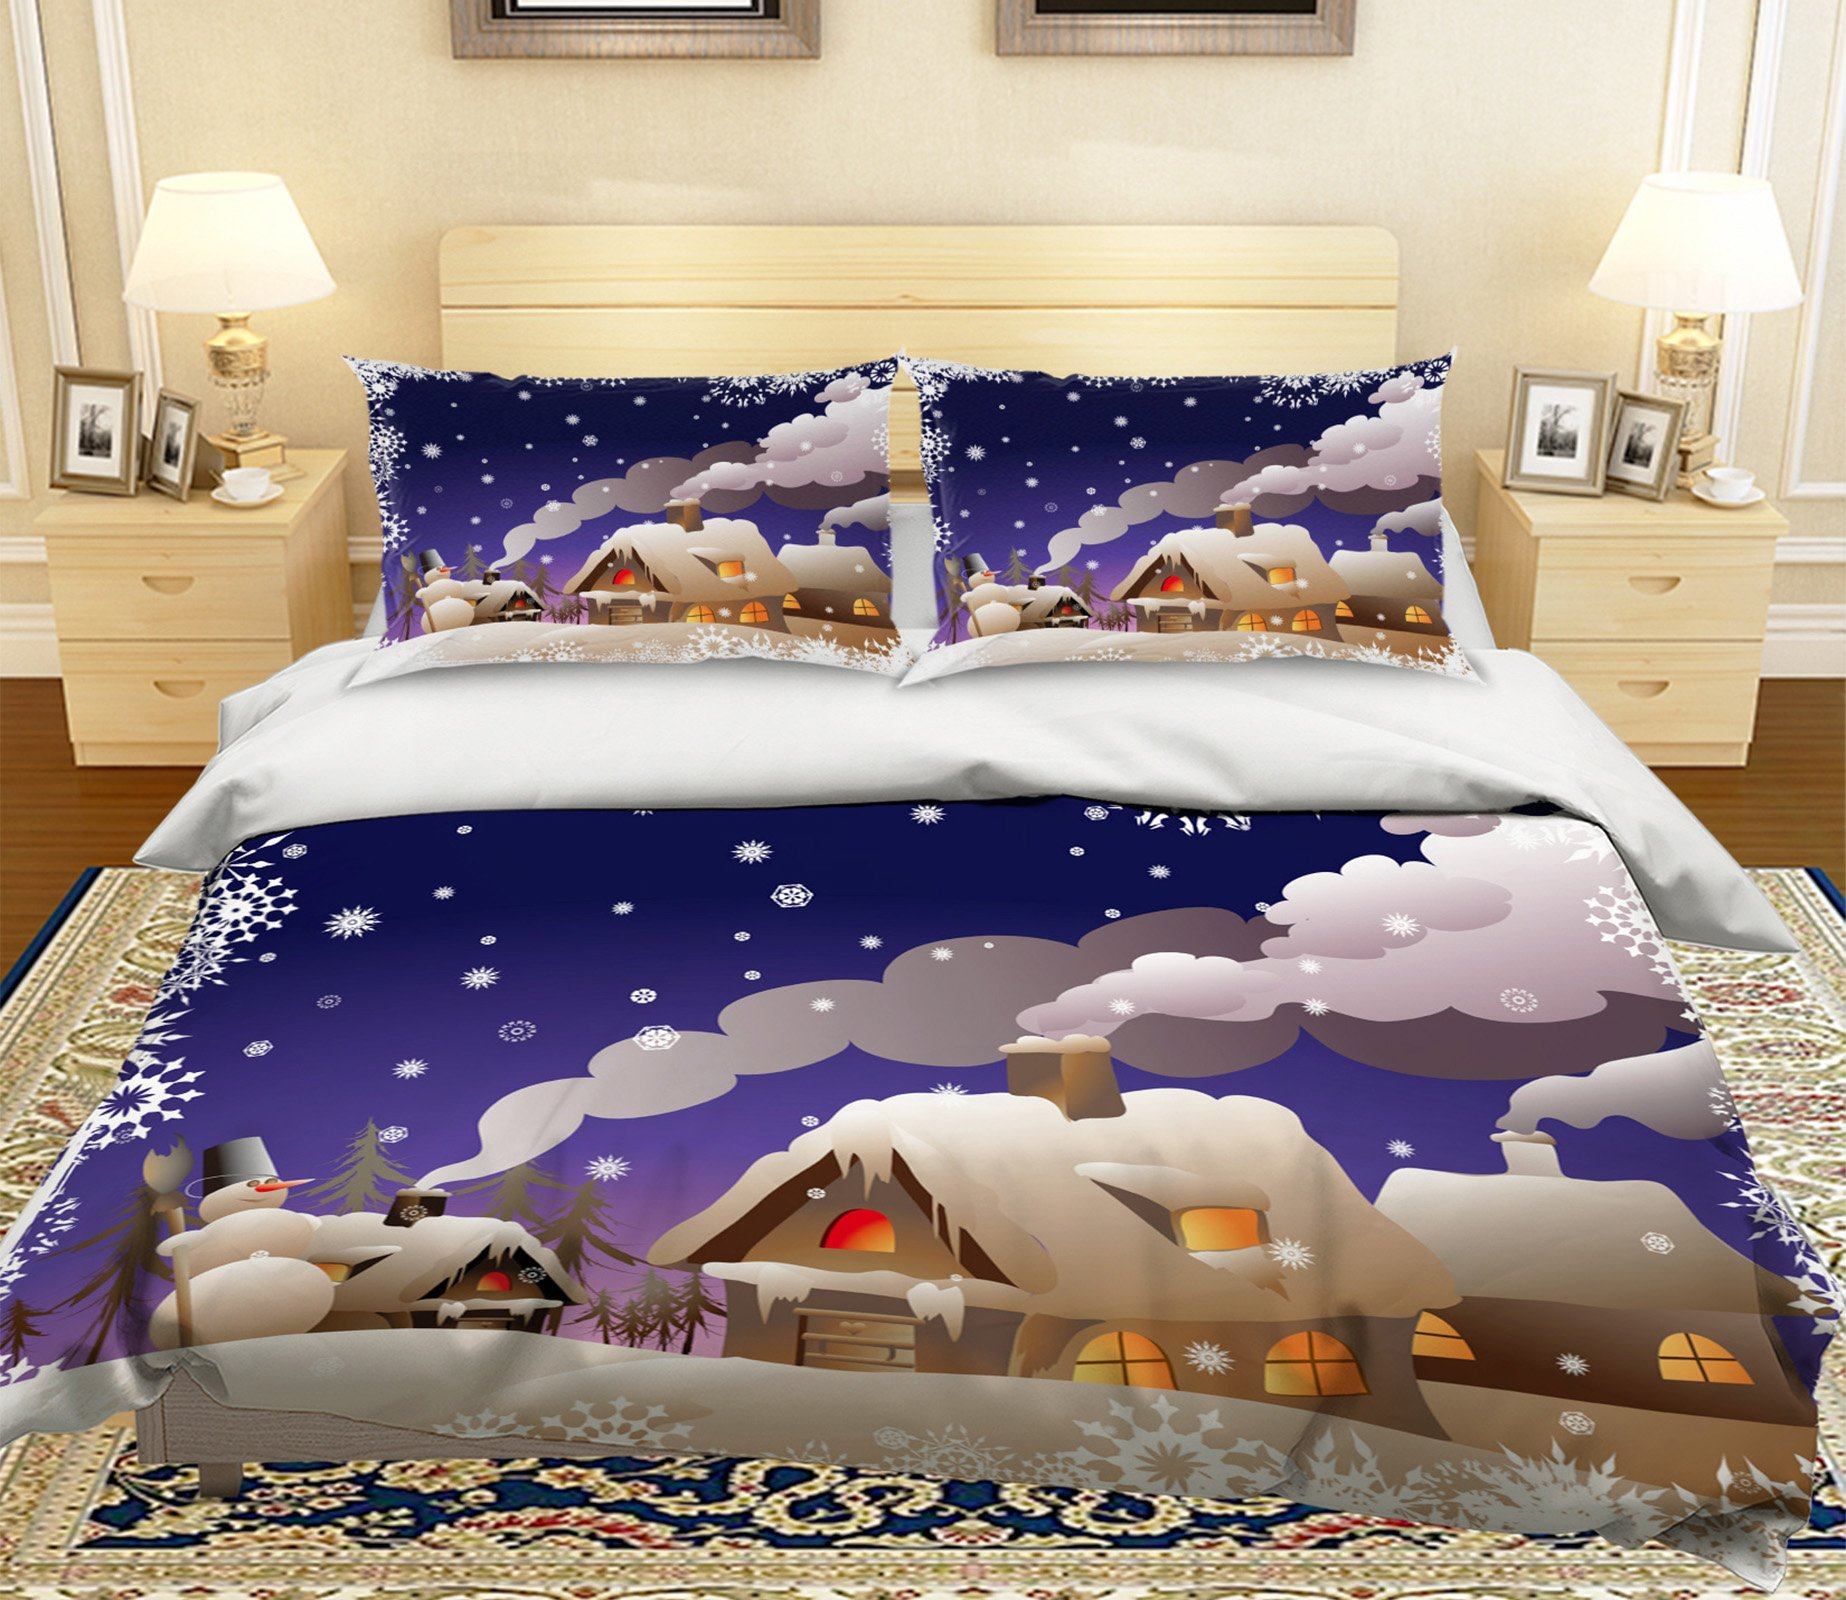 3D Snowman Smoke 35 Bed Pillowcases Quilt Quiet Covers AJ Creativity Home 